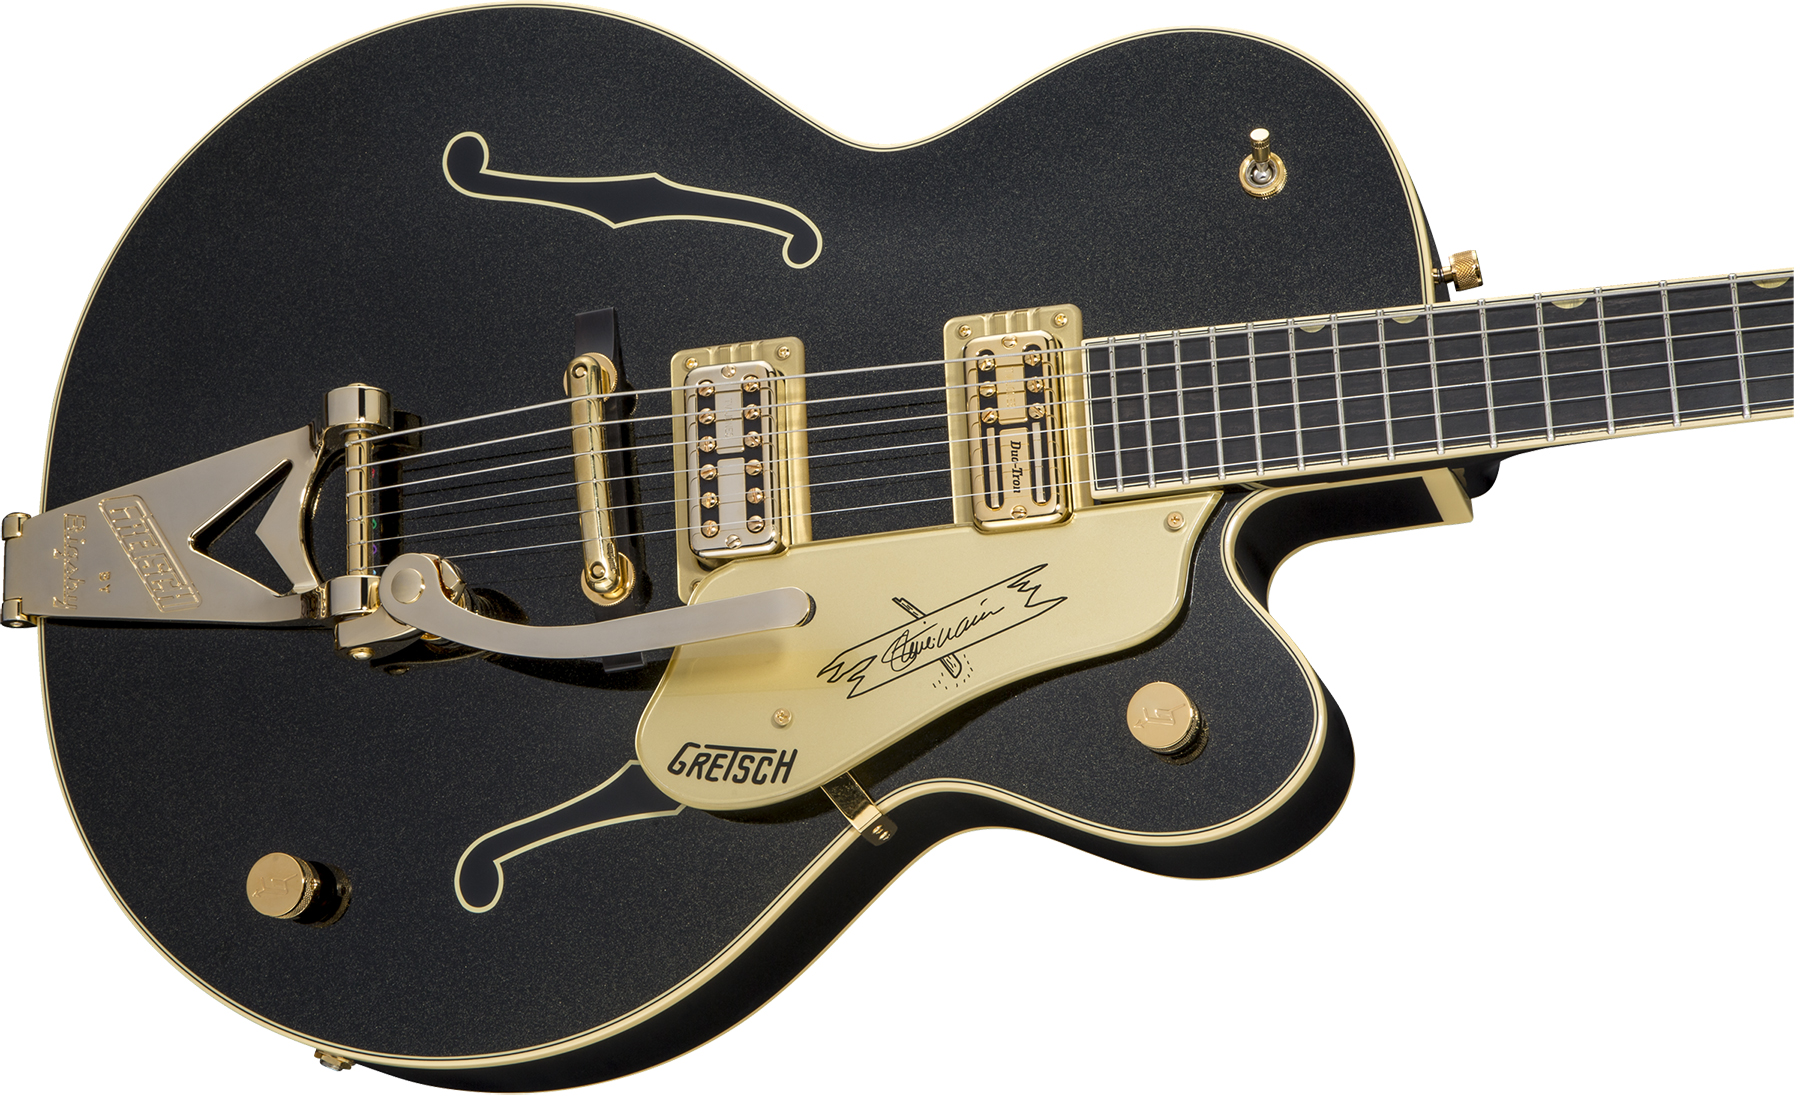 Gretsch Steve Wariner G6120t-sw Nashville Japon Signature Hh Bigsby Eb - Magic Black - Semi-hollow electric guitar - Variation 2